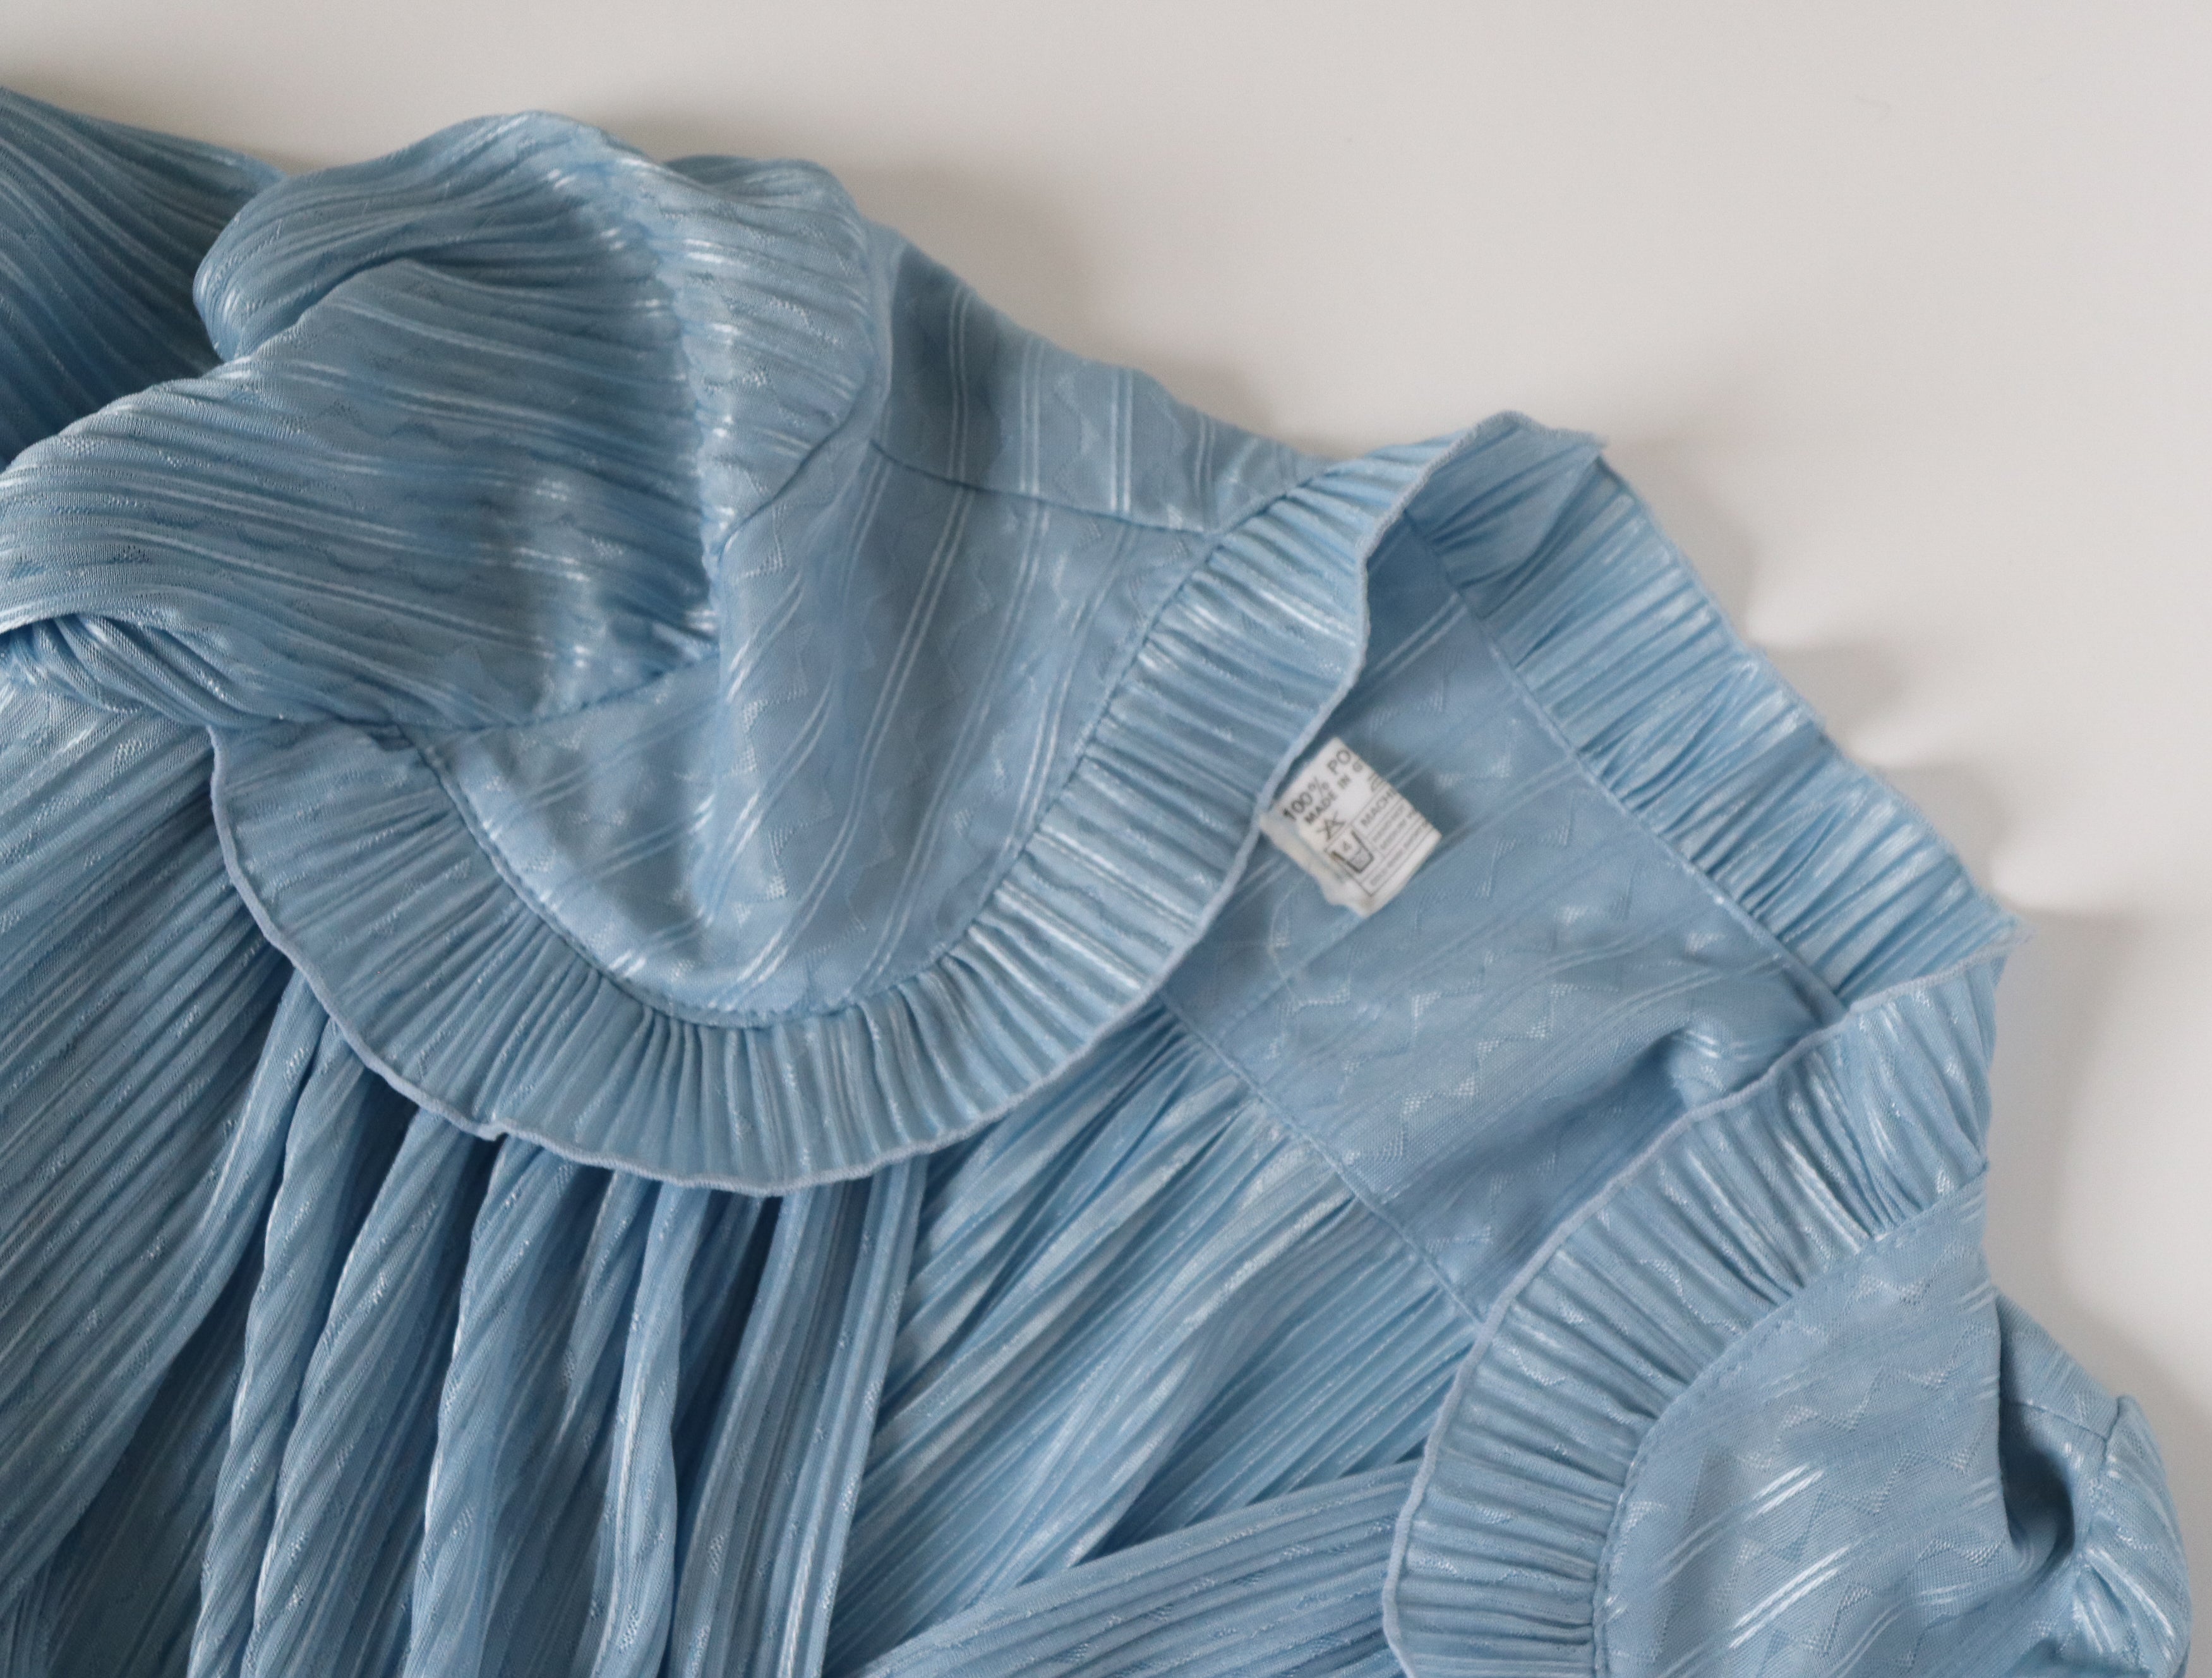 Pleated Polyester Dress - Elastic Waist - 1980s Vintage - UK 10 / 12 Short